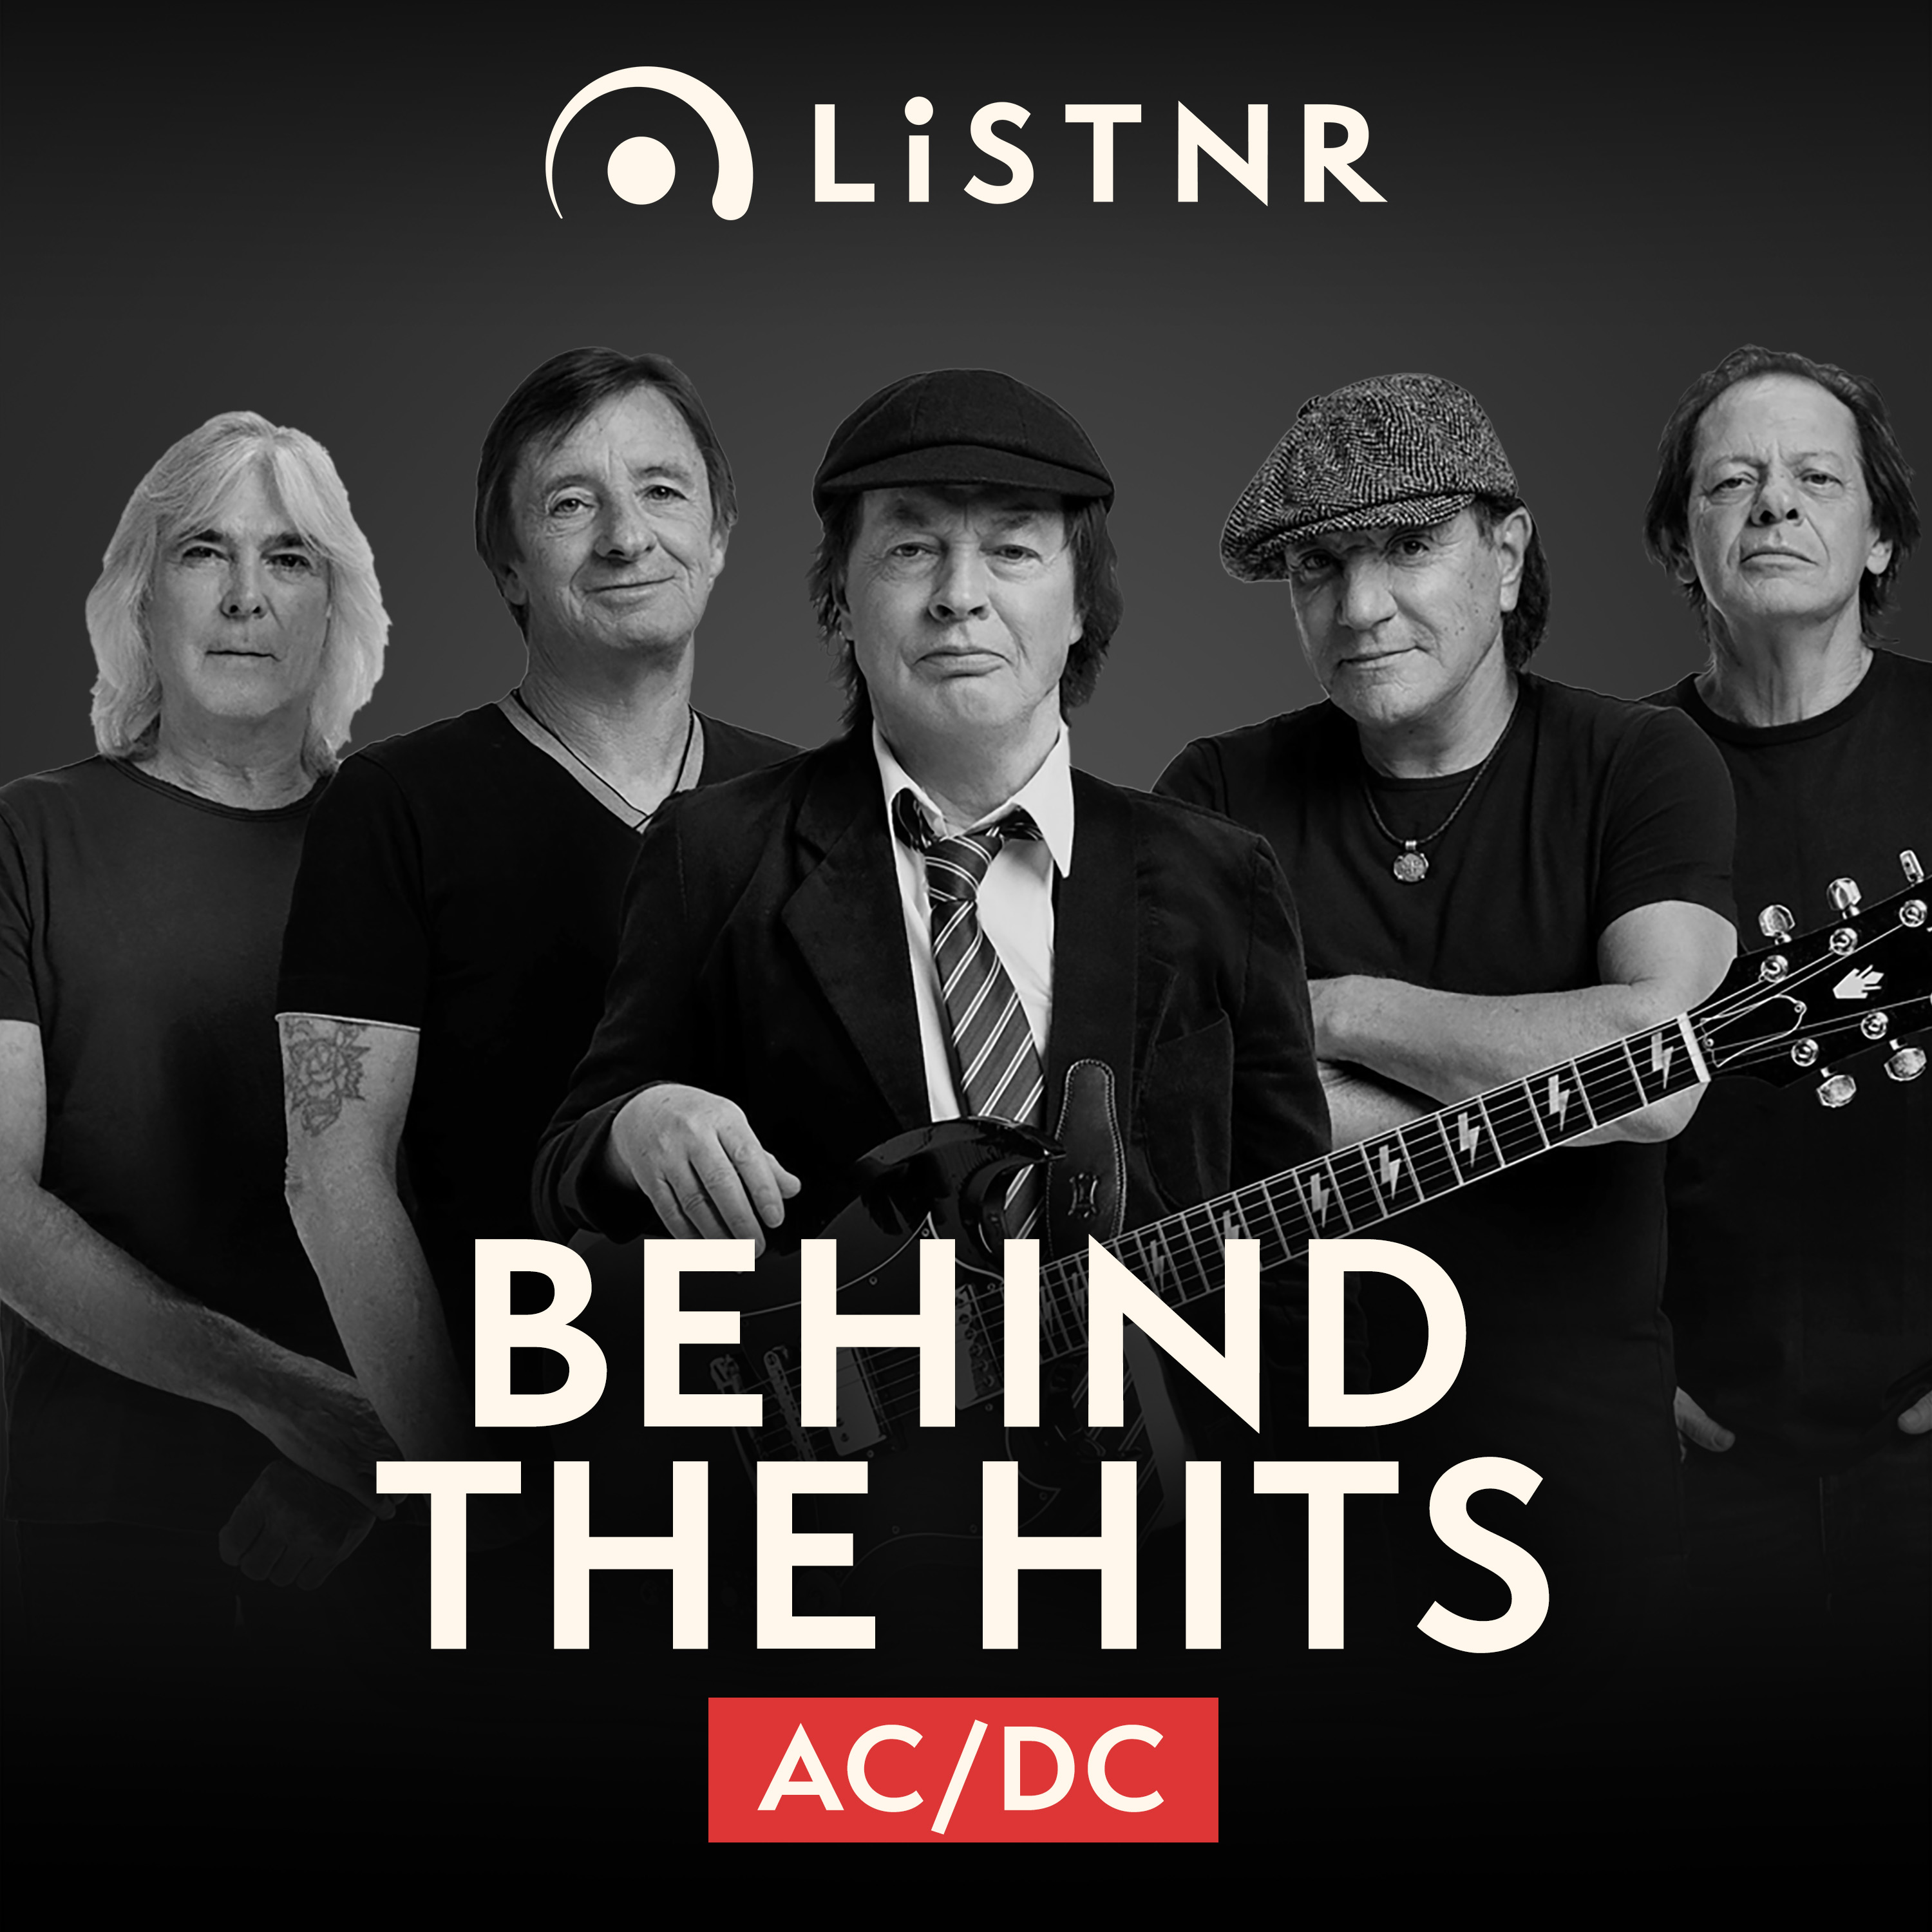 AC/DC – The Brian Johnson Era (Part 2) cover image